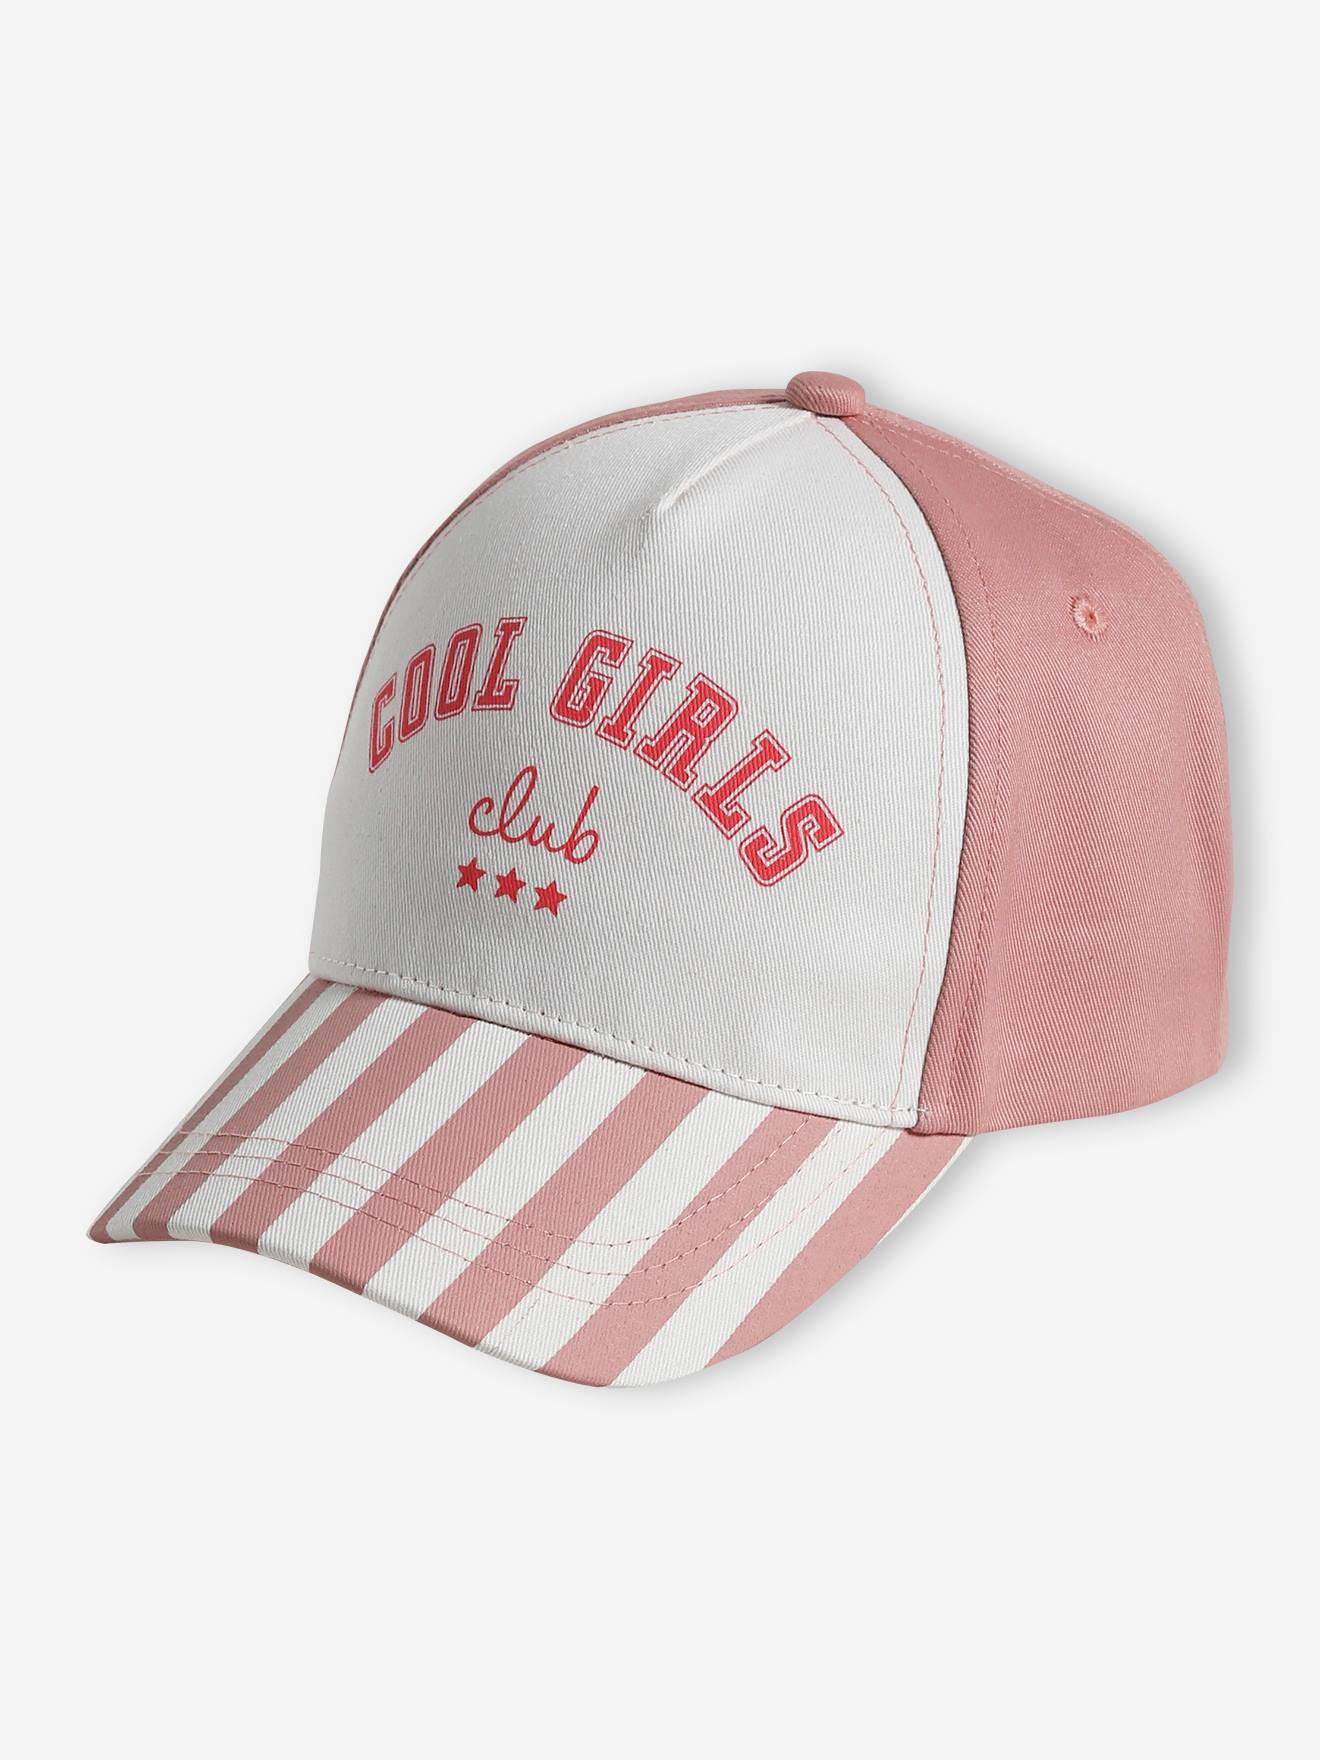 casquette fille cool girls club rayé rose